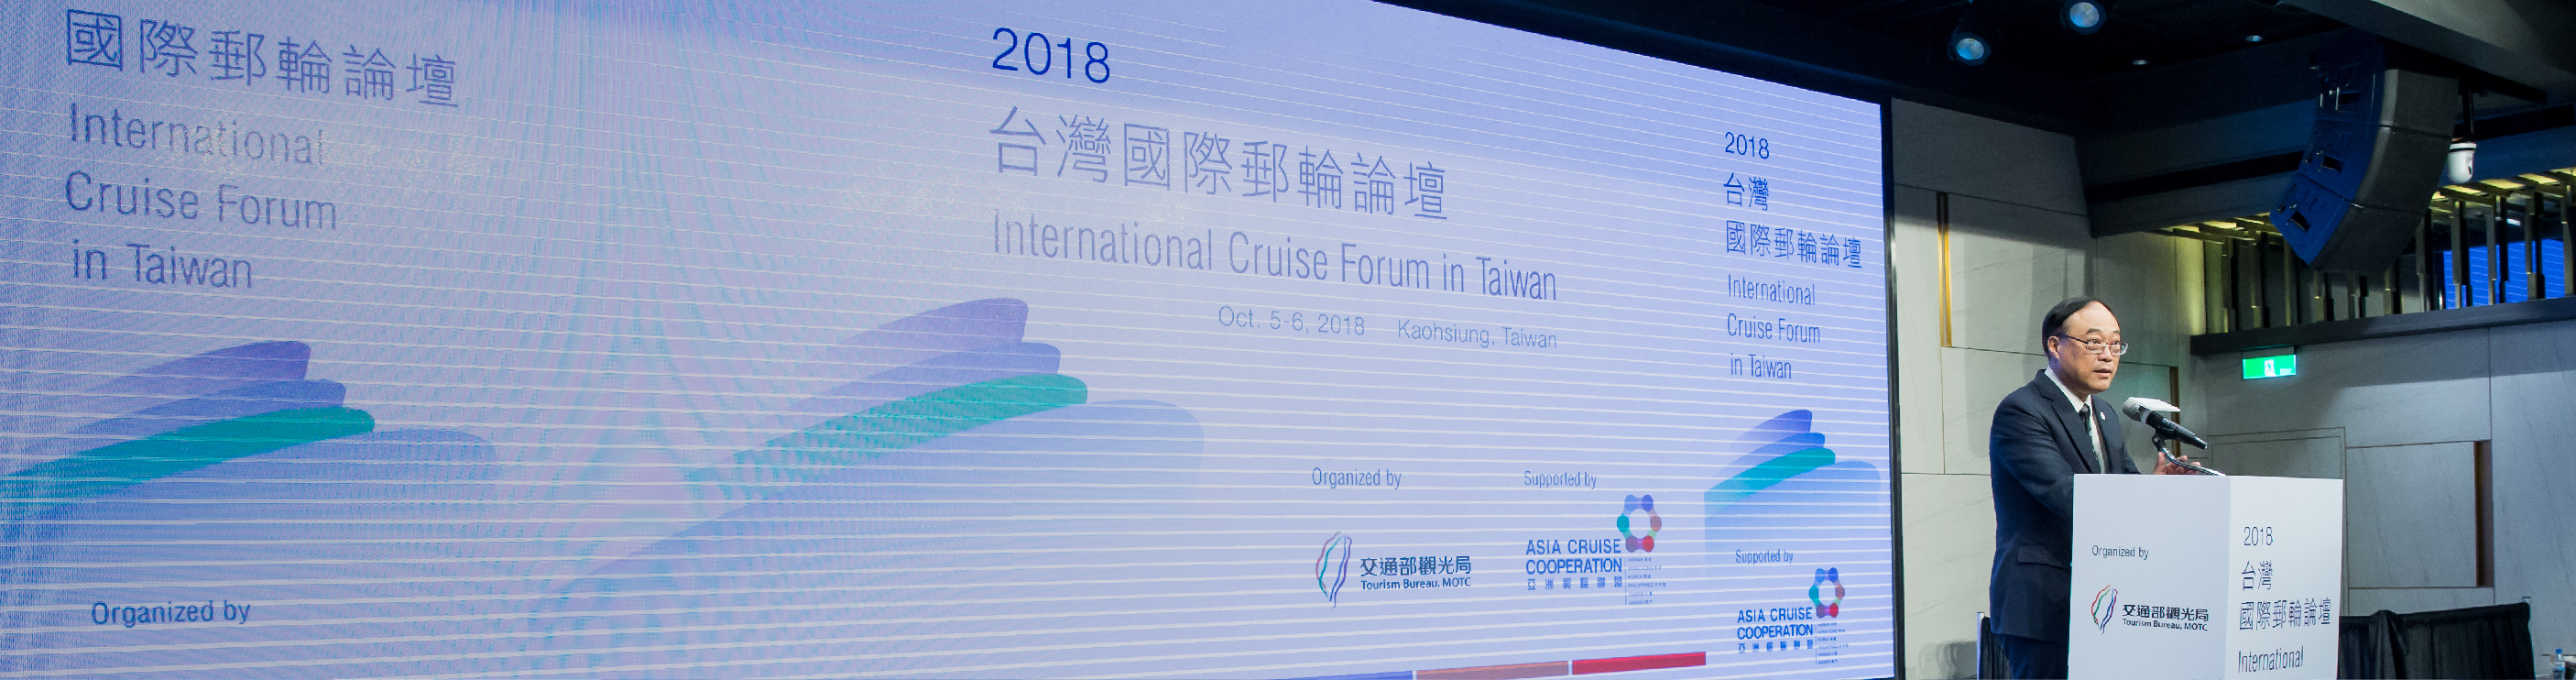 International Cruise Forum in Taiwan 2018